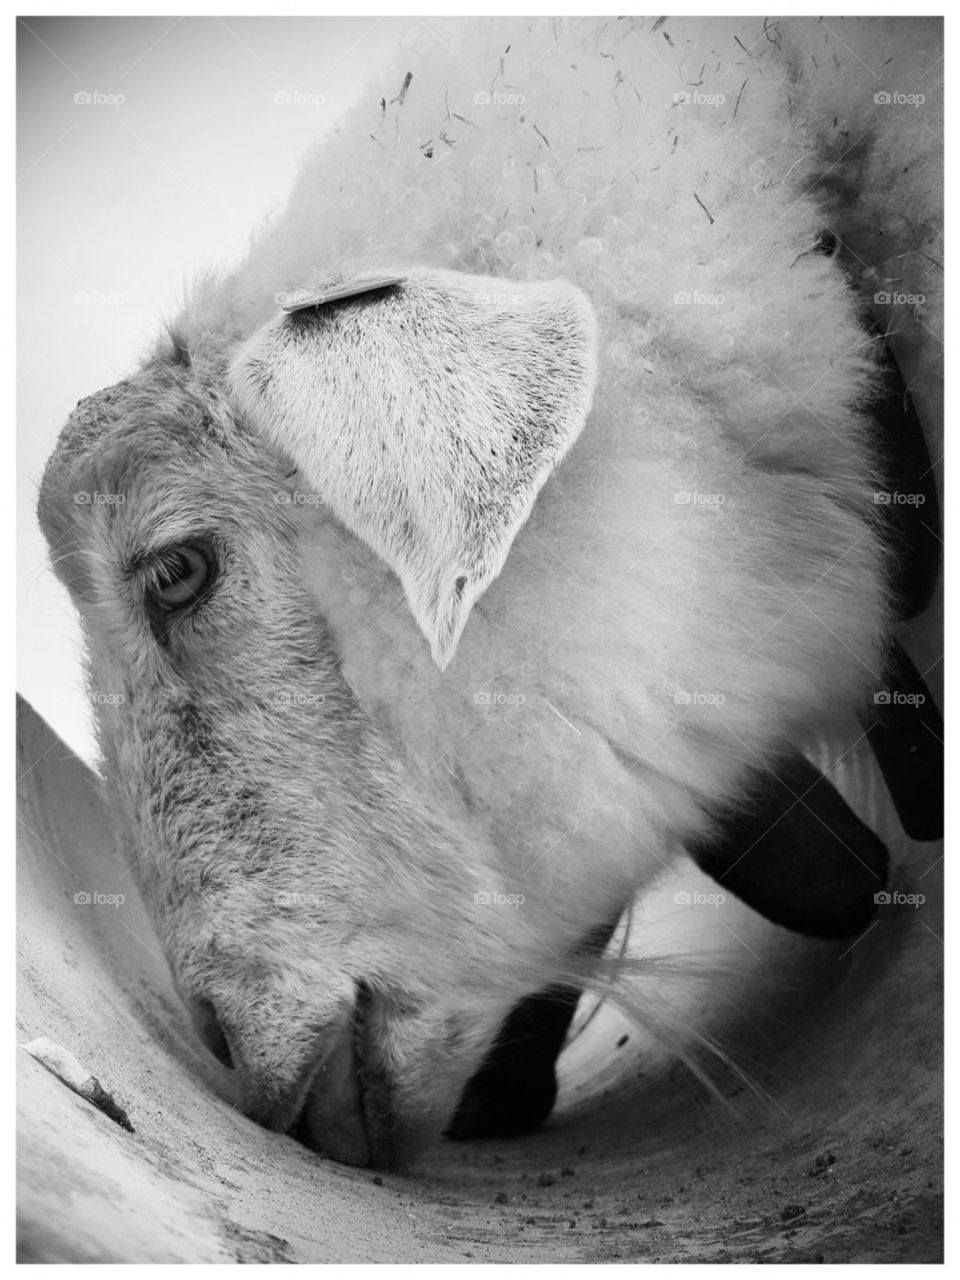 An eating goat